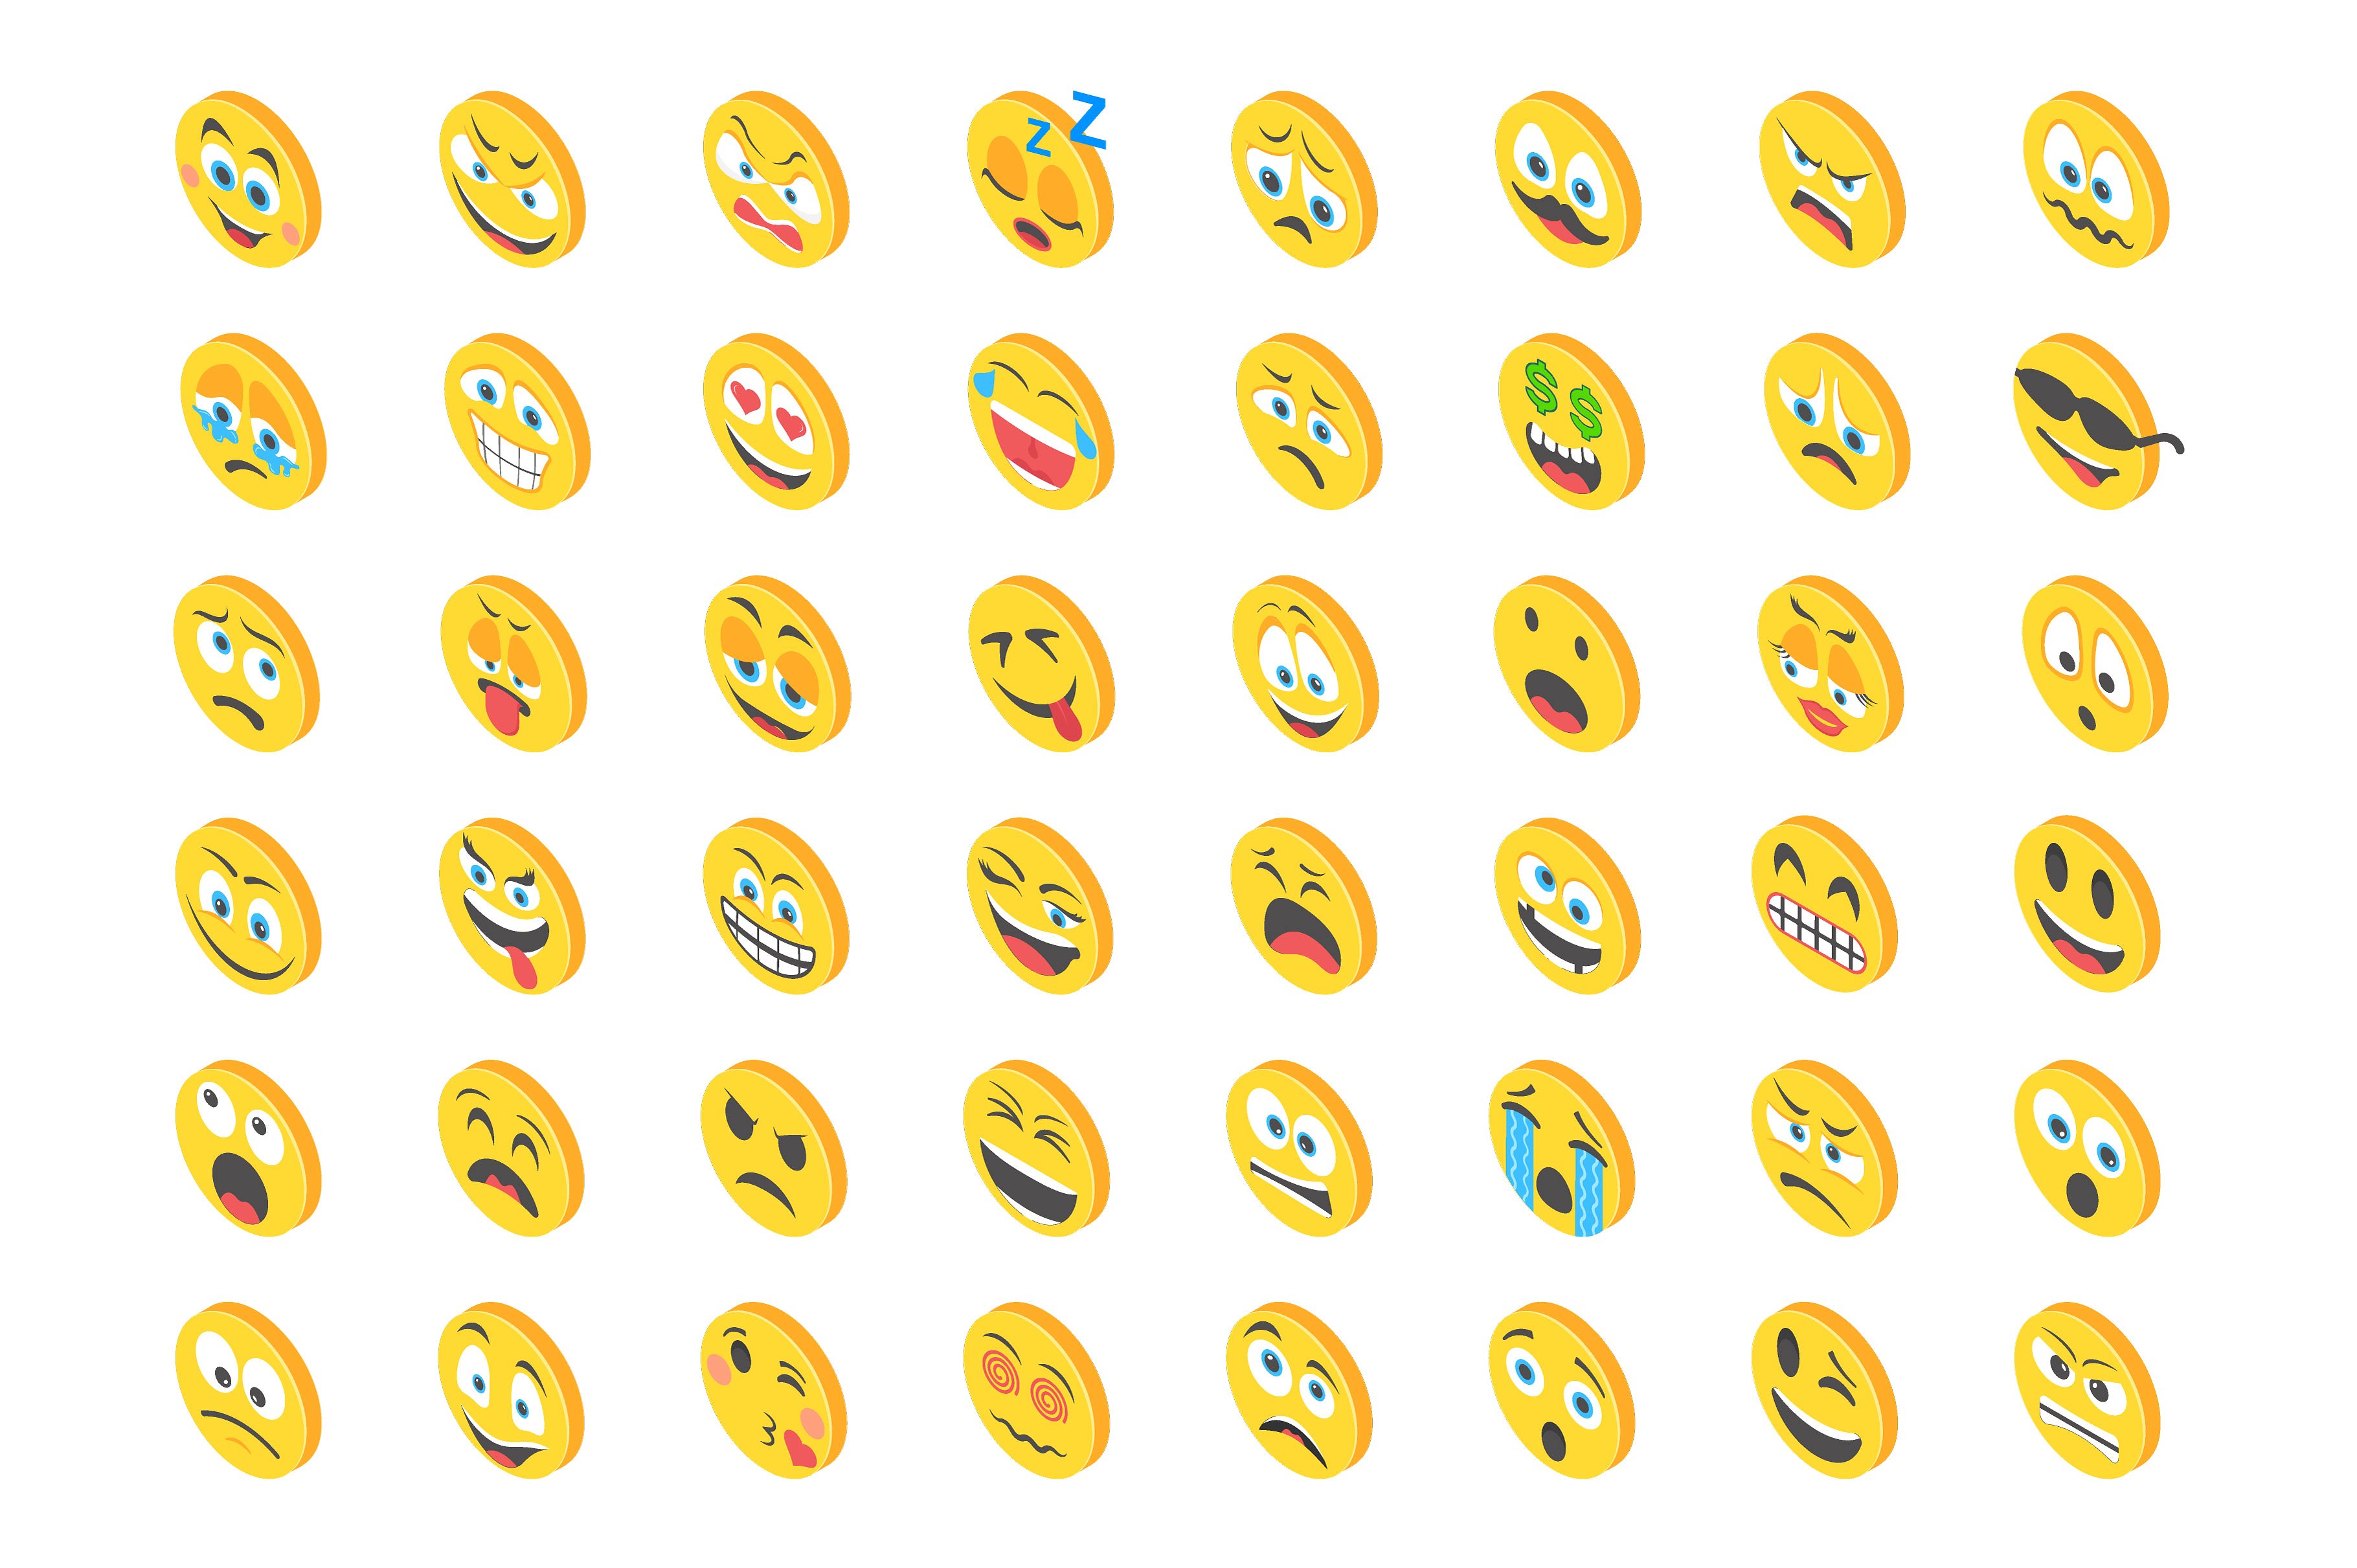 2500个表情符号emoji图标合集打包下载（包含AI,EPS,SVG,PNG,PDF,JPG格式） - UI素材下载